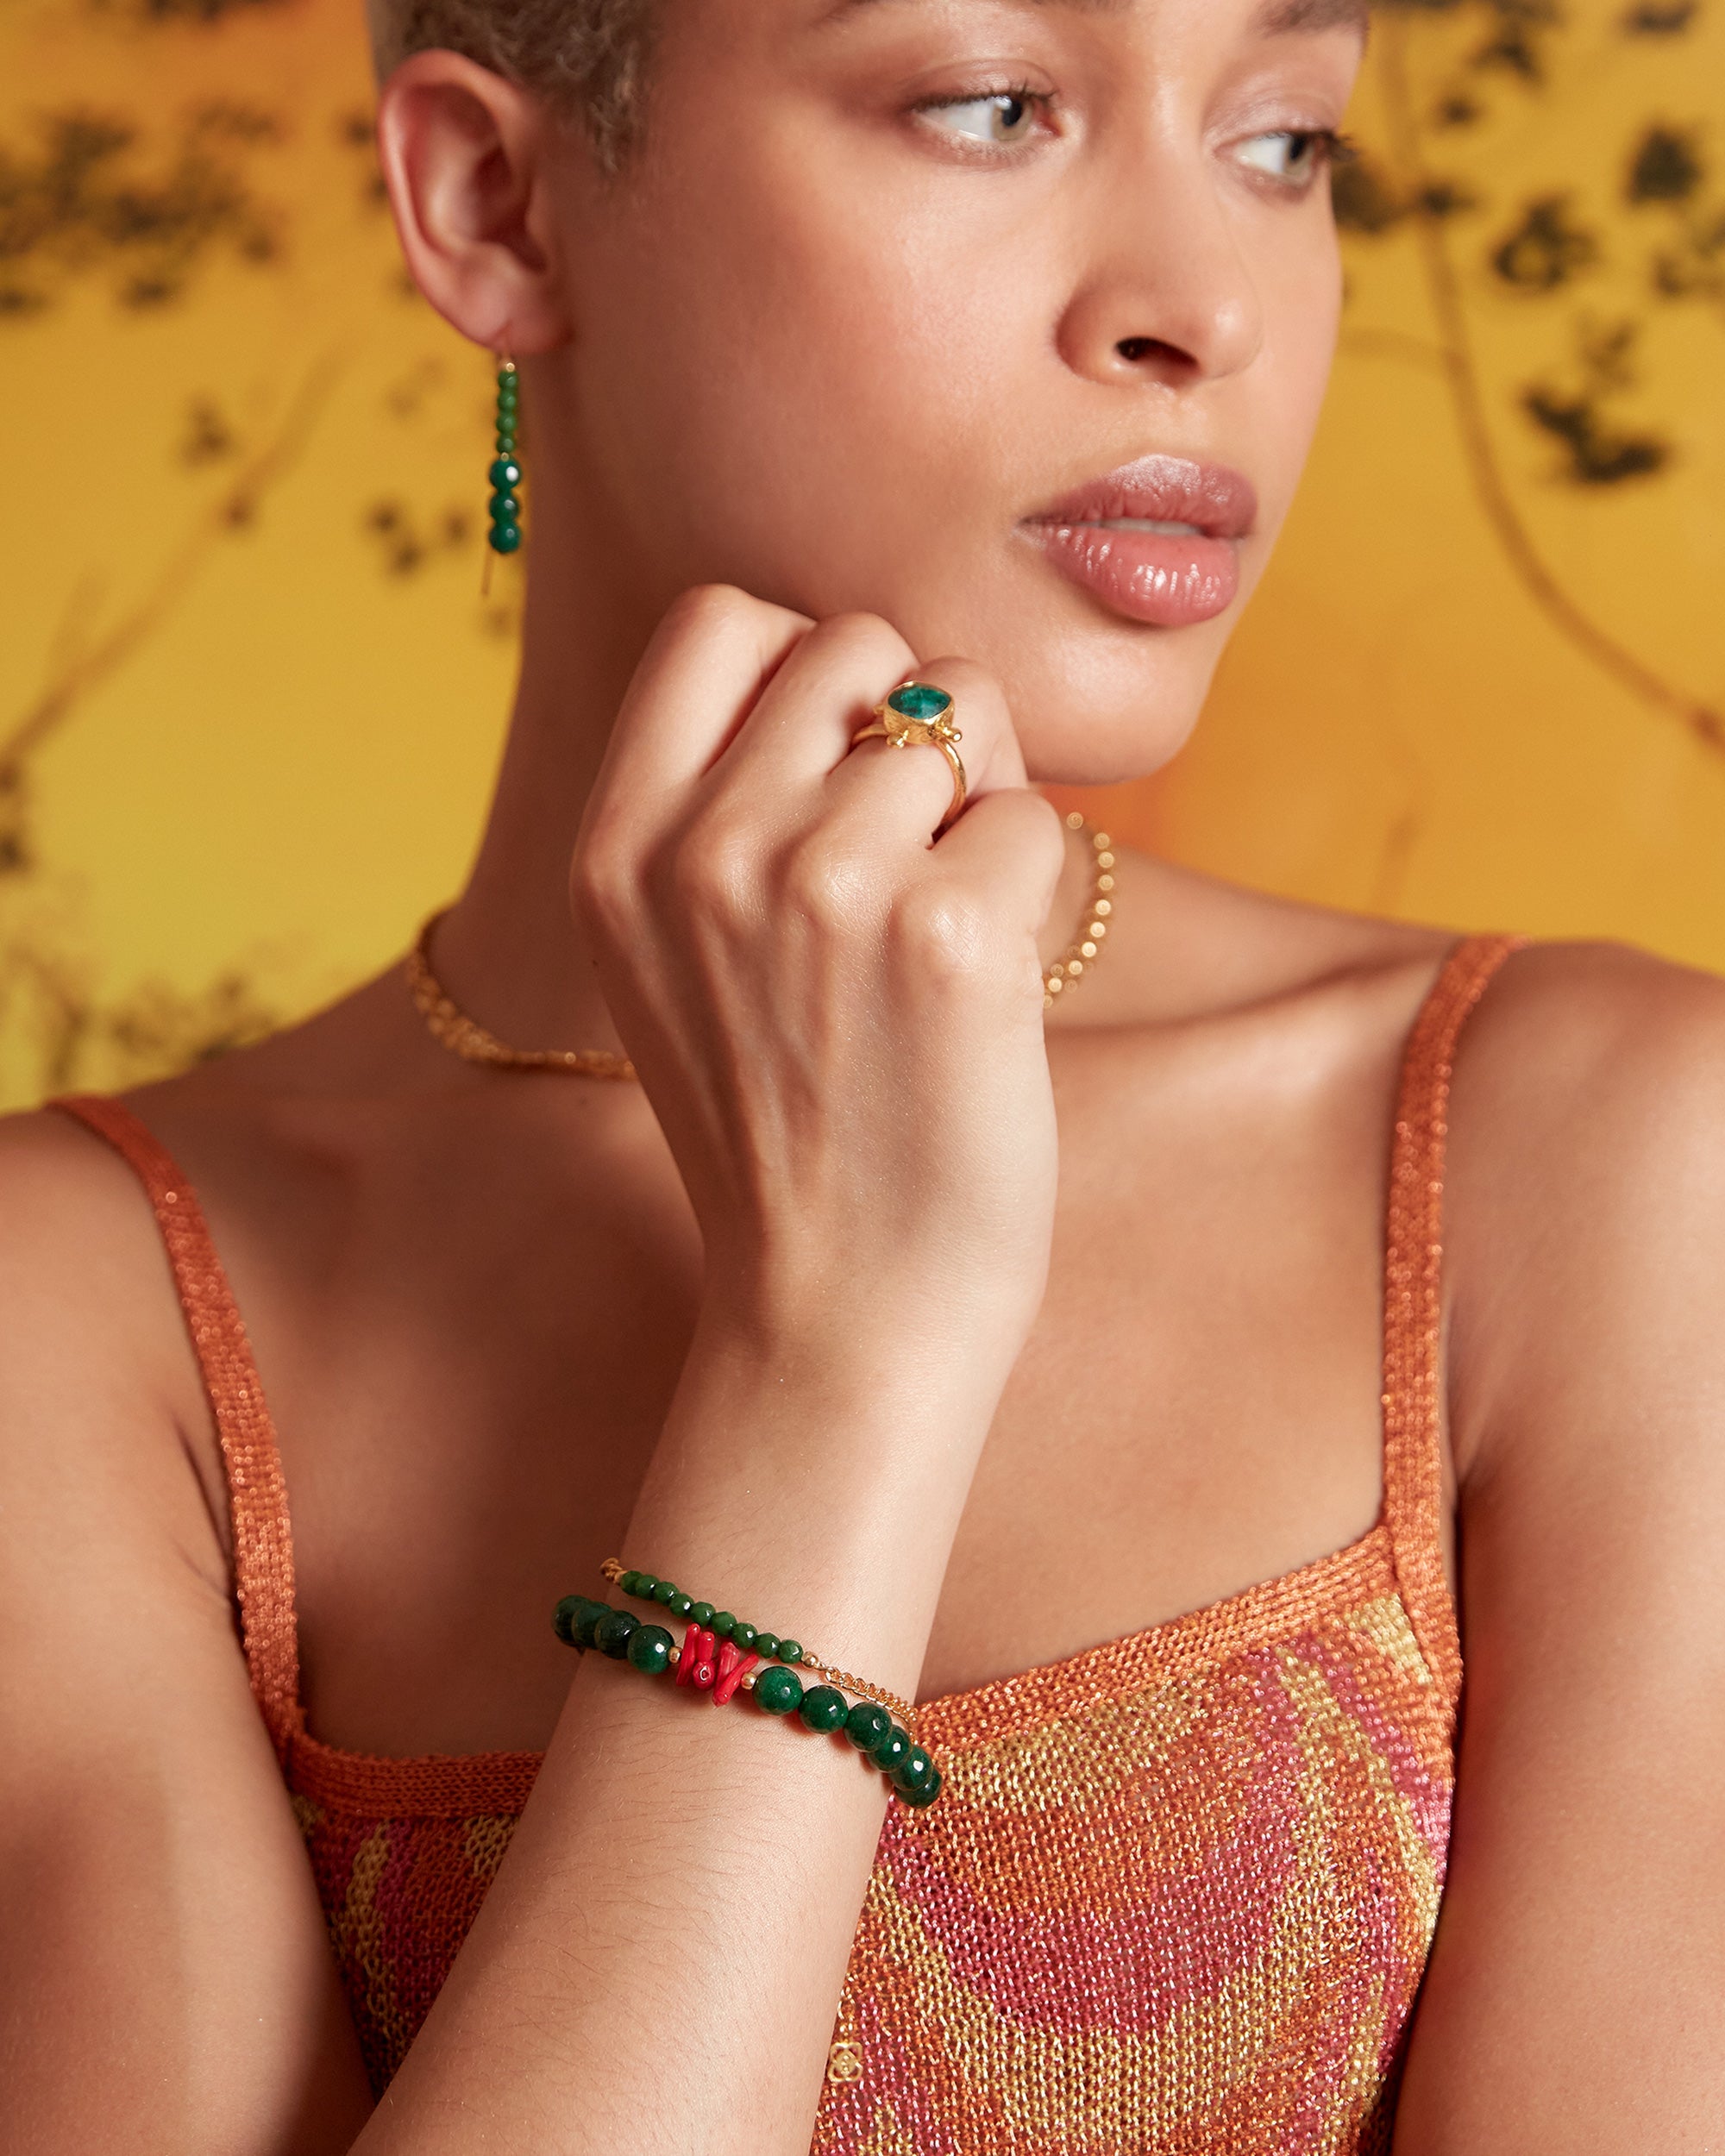 Julia Green Agate Beaded Bracelet | Sustainable Jewellery by Ottoman Hands